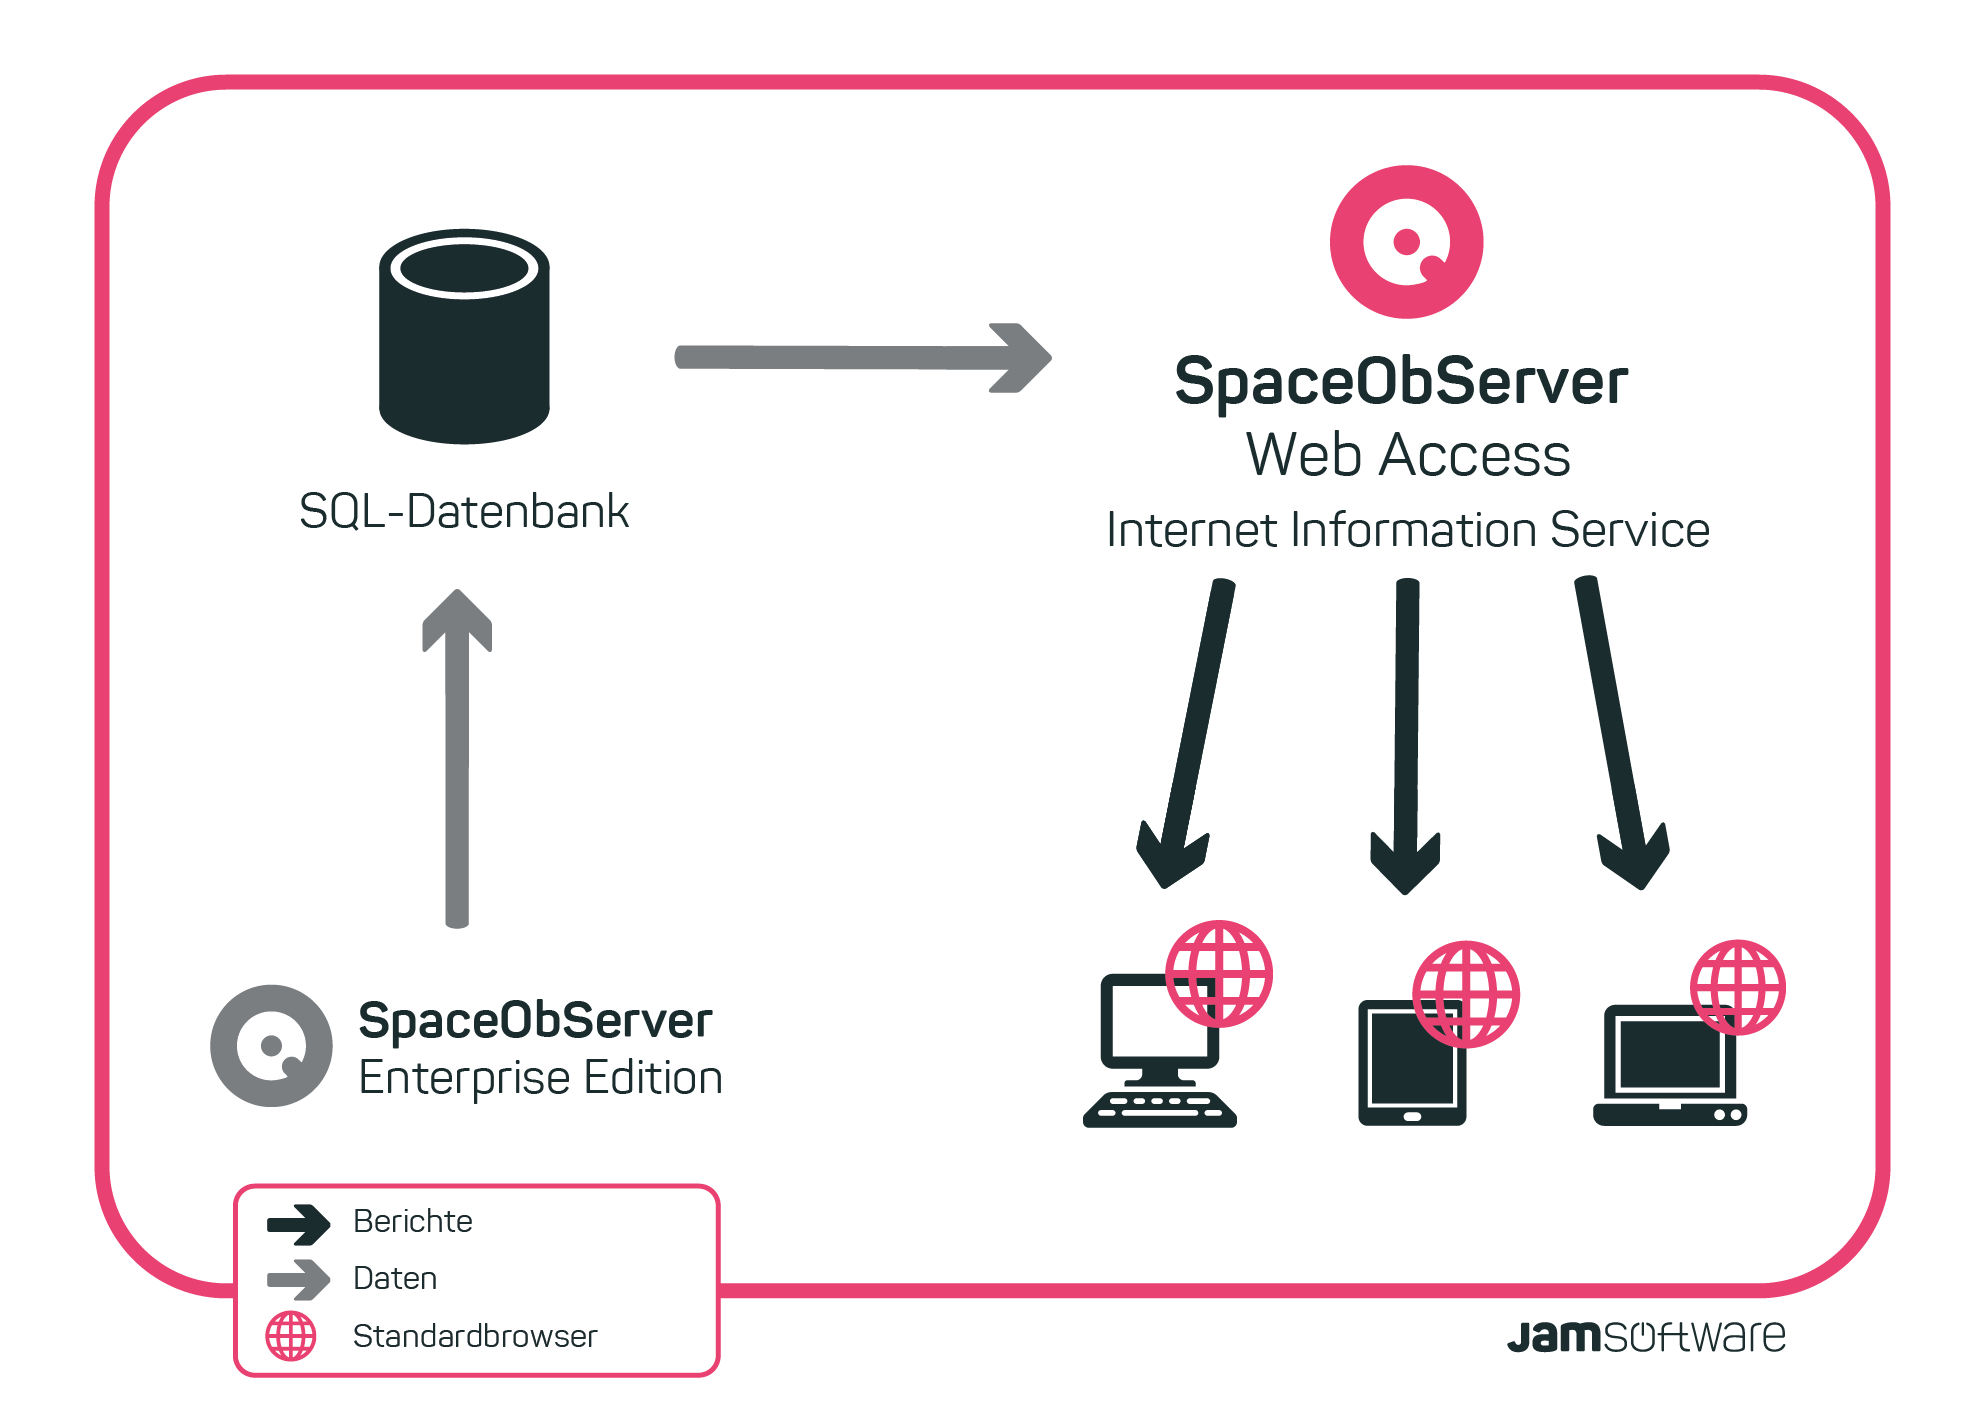 Funktionsweise von SpaceObServer WebAccess